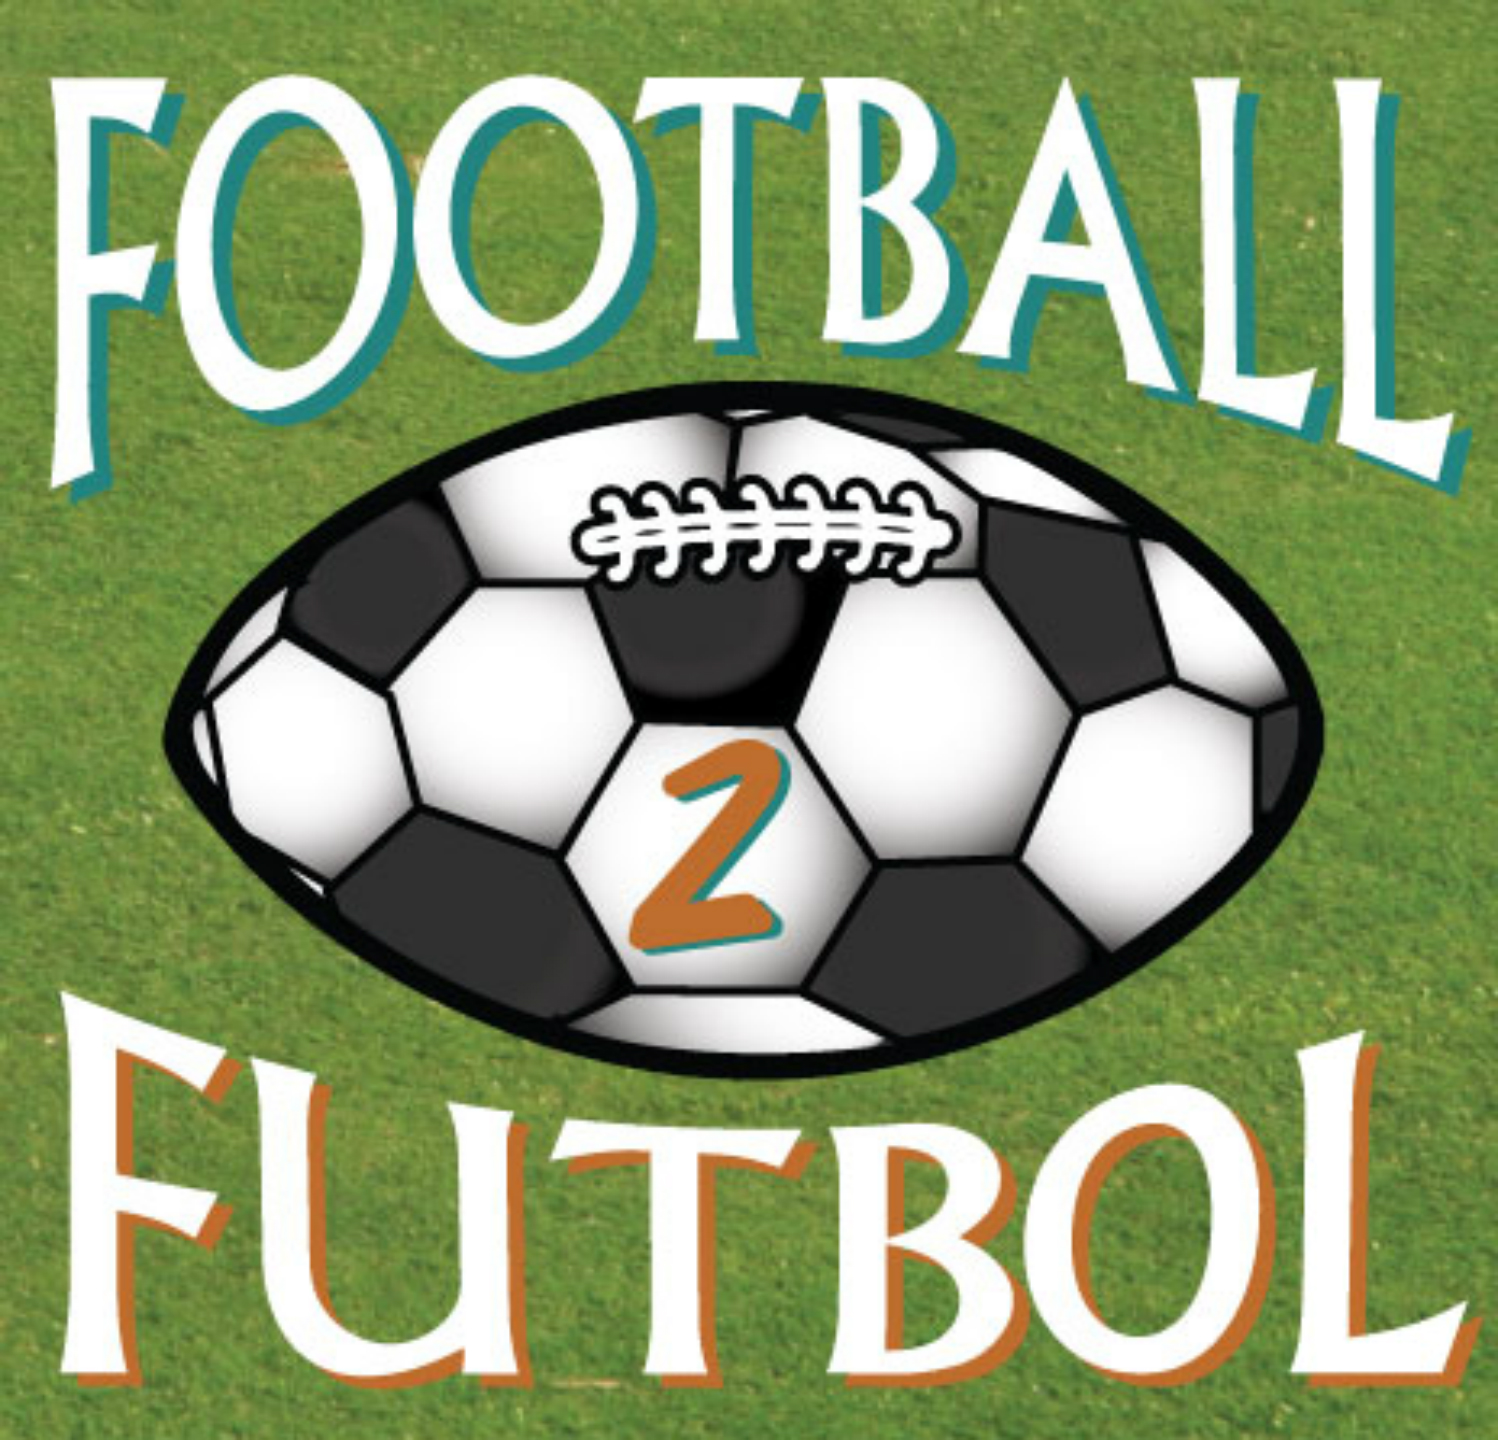 Football 2 Futbol:  NFL Week 7 Recap, Ravens vs. Cardinals MNF Post-Game, & College Football Week 8